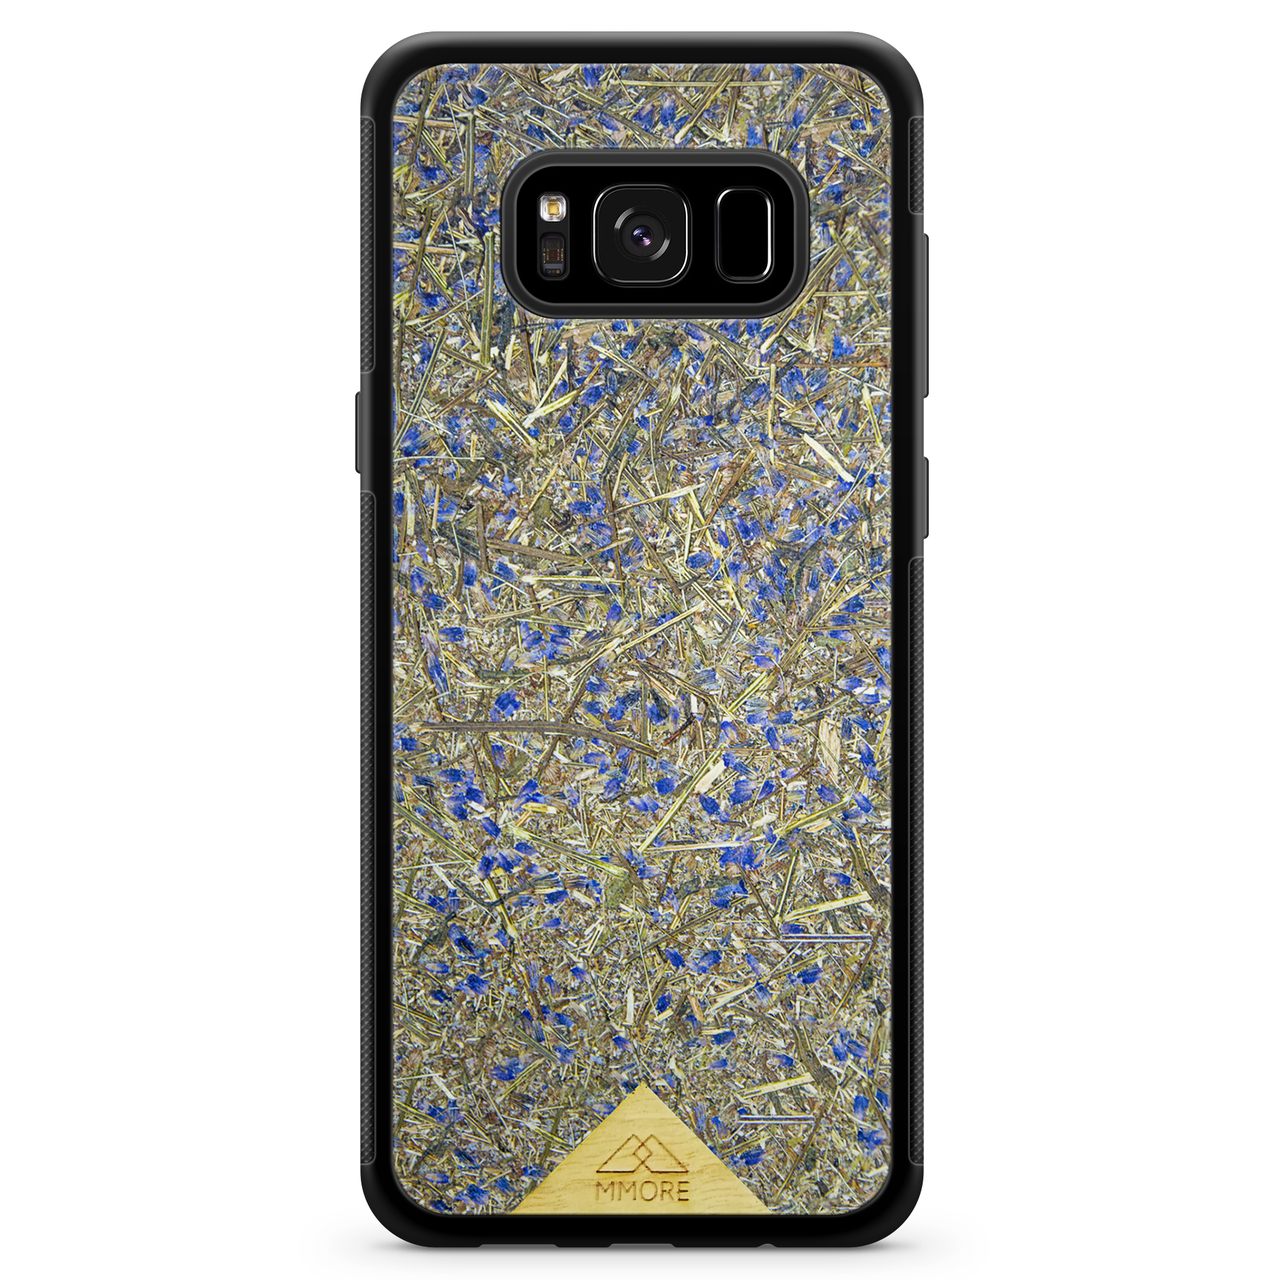 Samsung Galaxy S8 Black Frame Lavender Phone Case